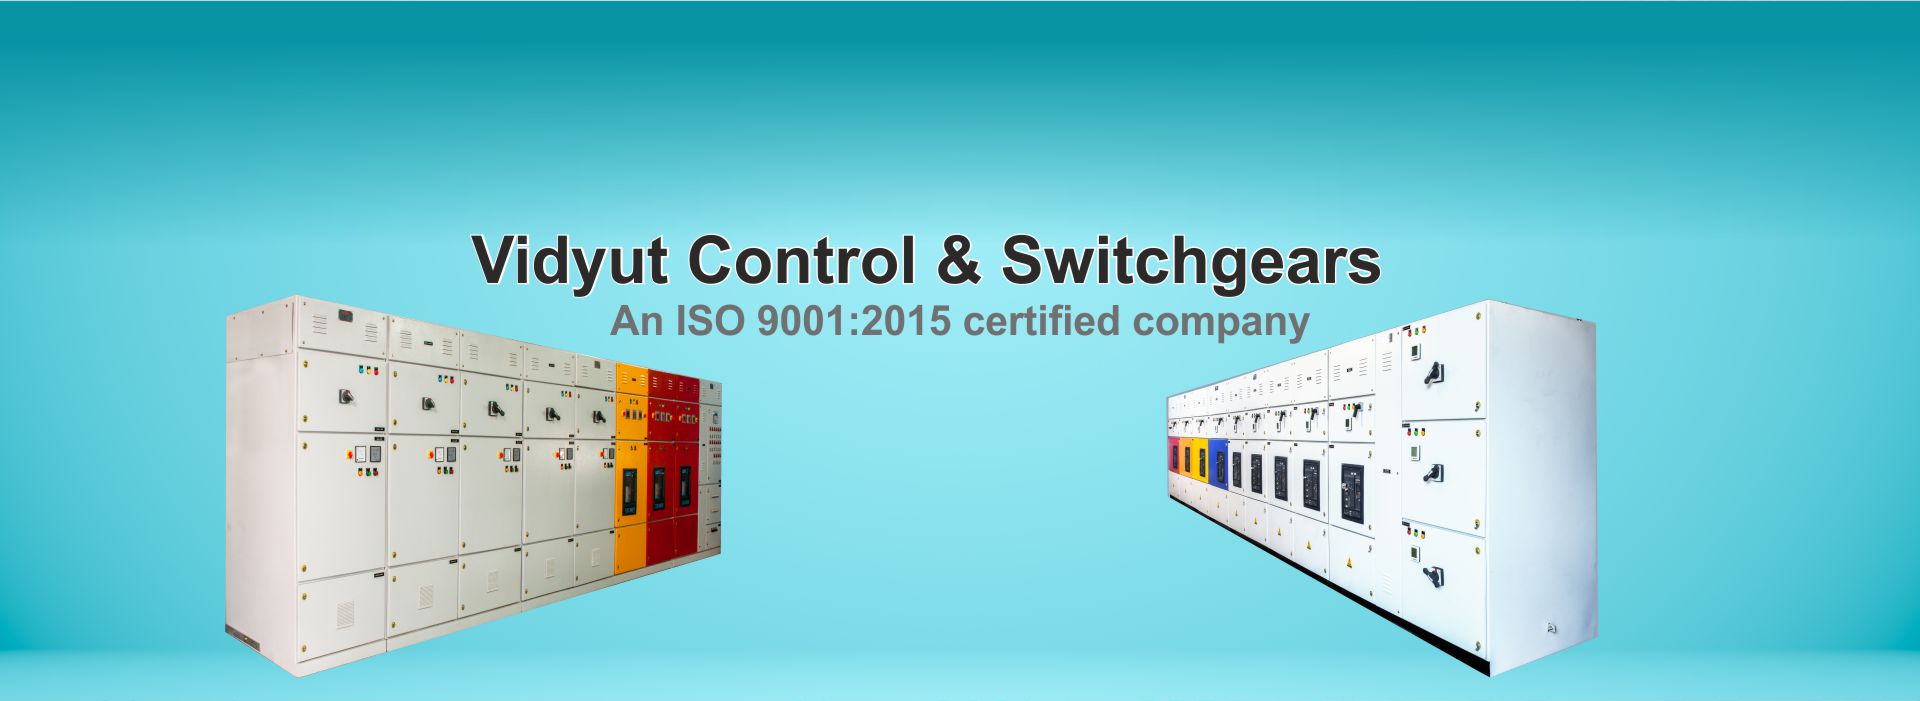 Vidyut Control & Switchgears